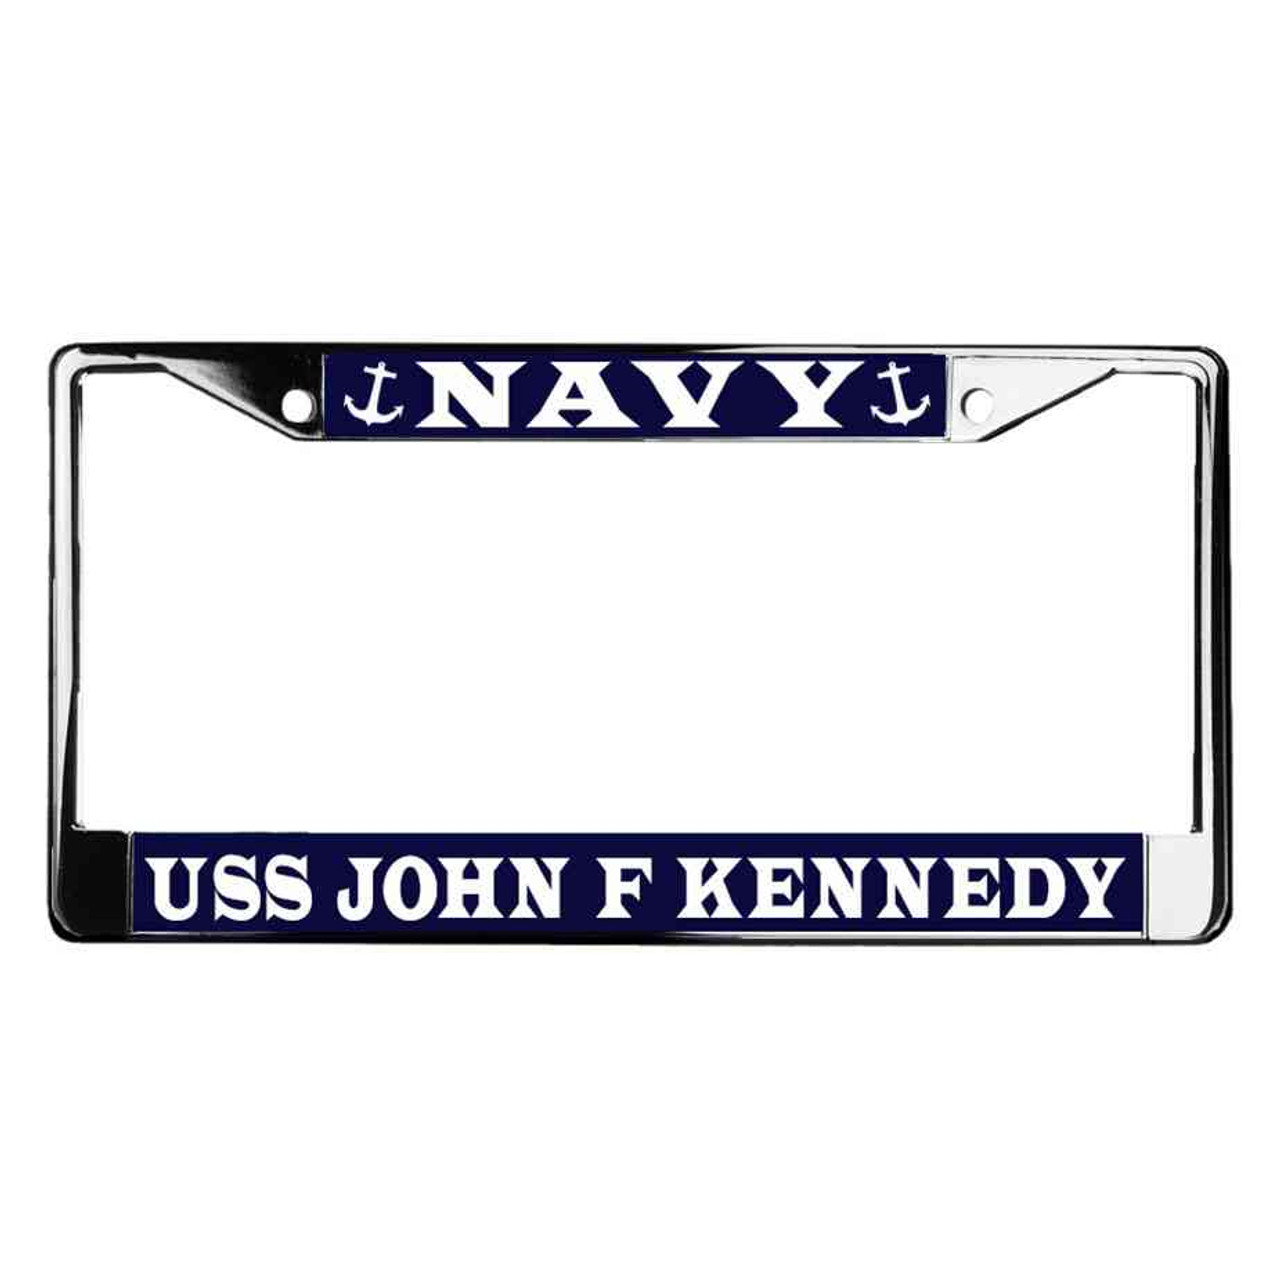 uss john f kennedy license plate frame